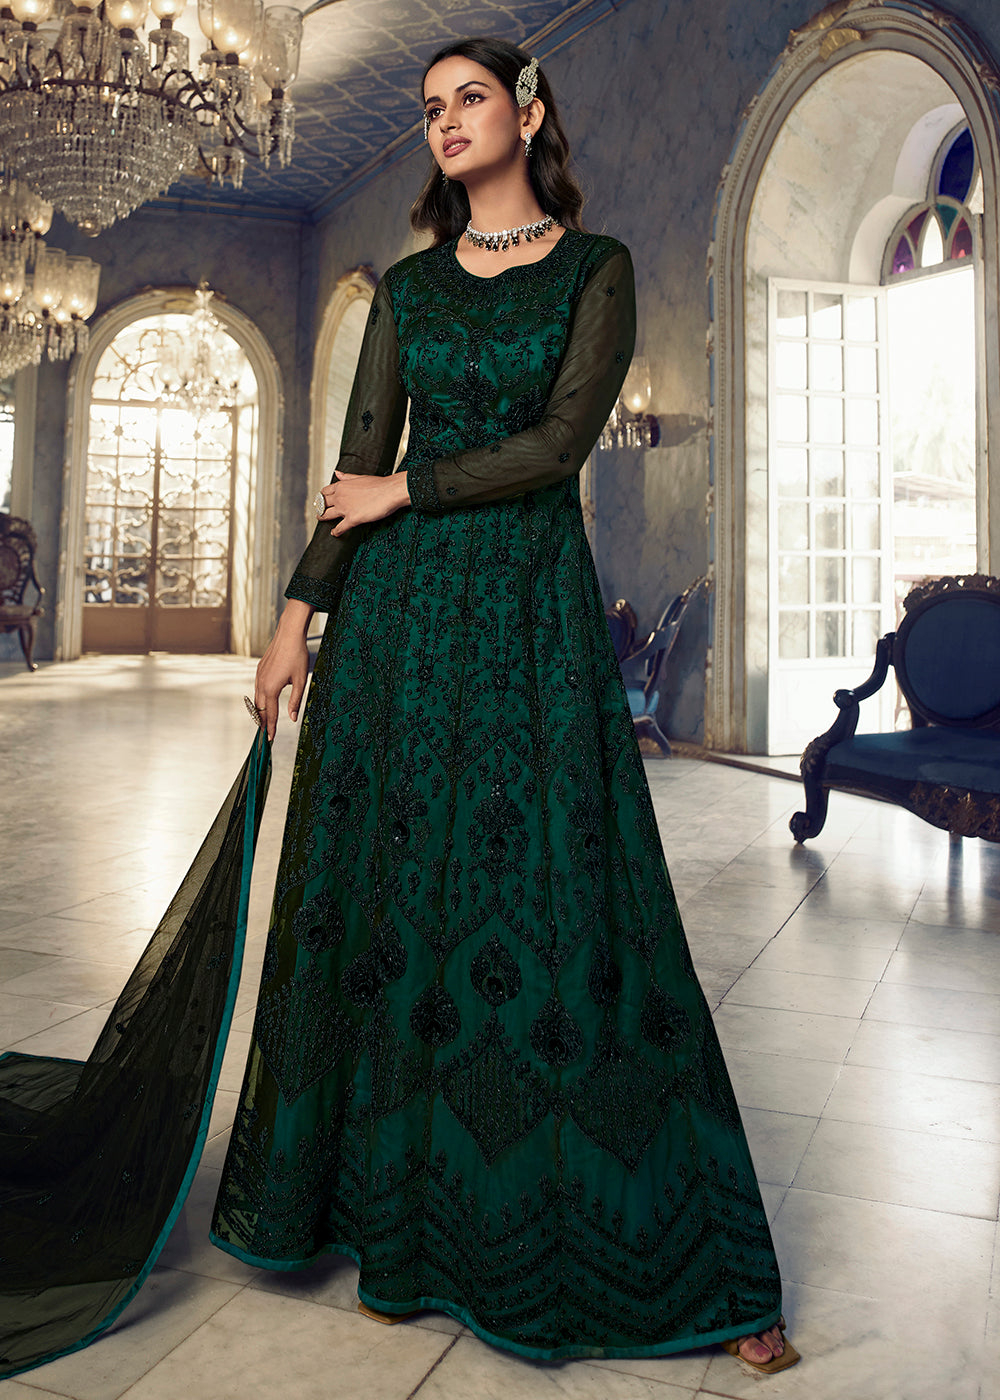 Buy Now Pine Green Wedding Party Net Designer Anarkali Suit Online in USA, UK, Australia, New Zealand, Canada & Worldwide at Empress Clothing.